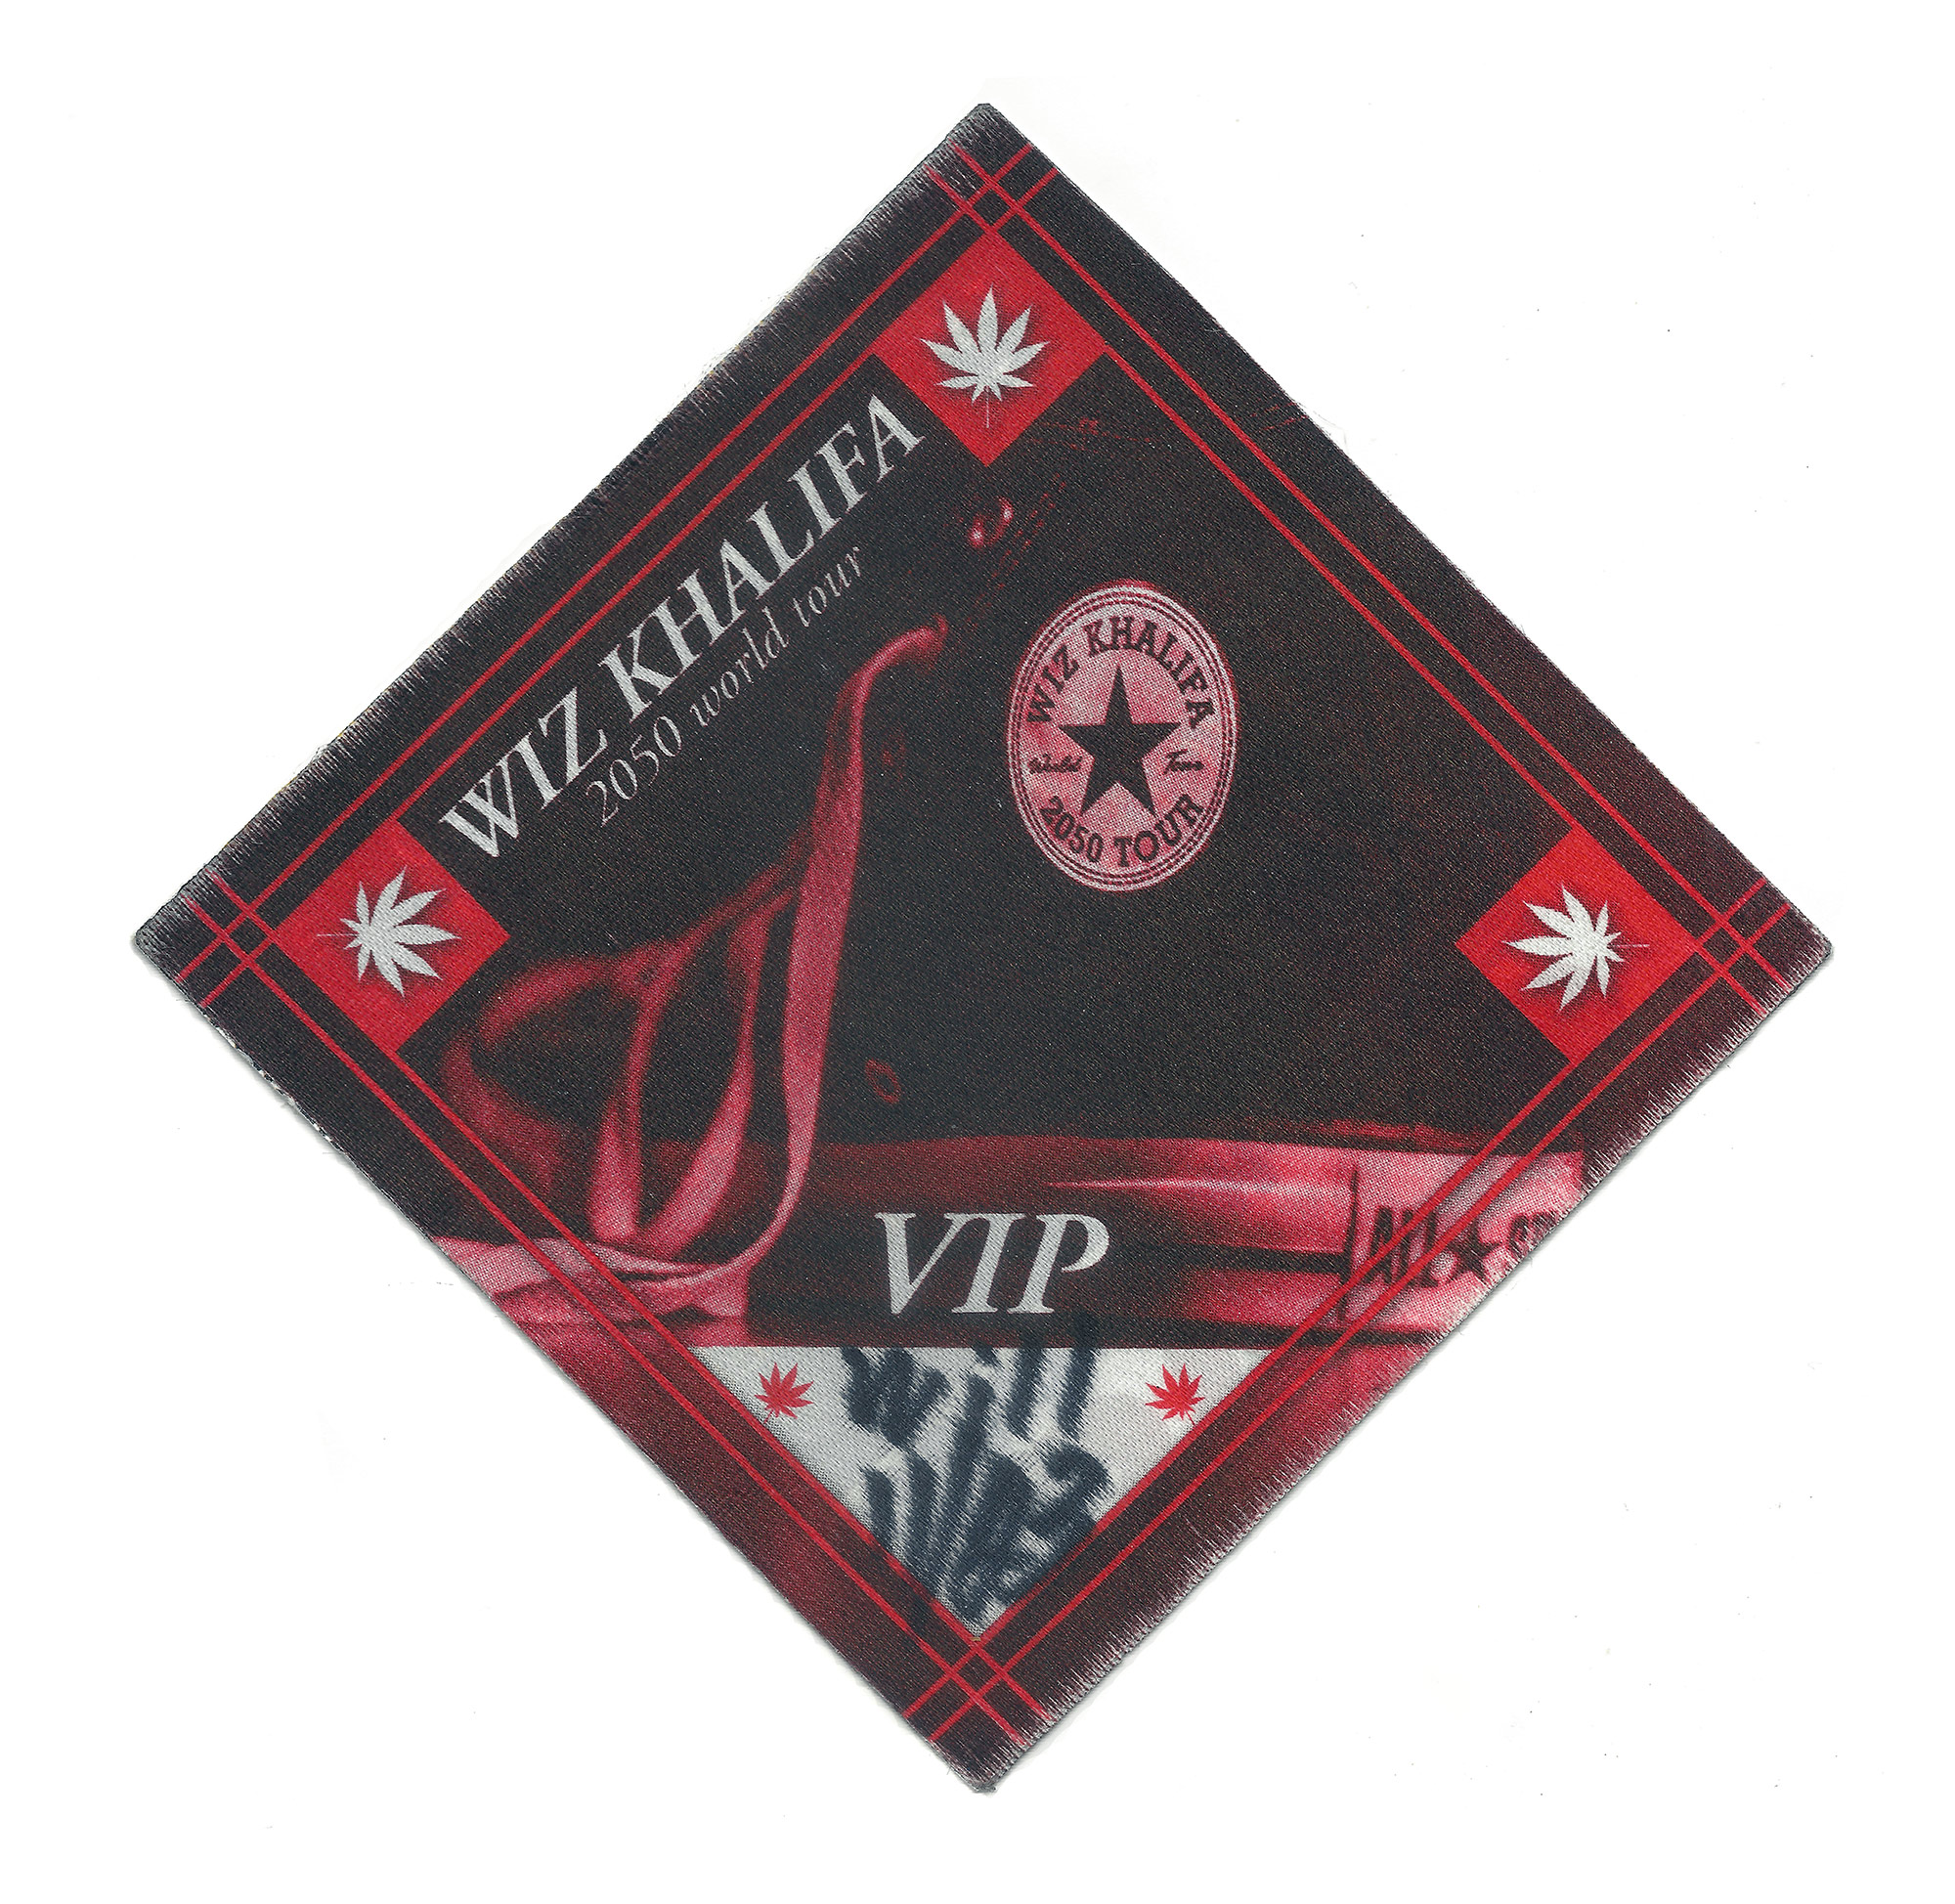 A 2013 Wiz Khalifa & Juicy J tour VIP pass from Wiz